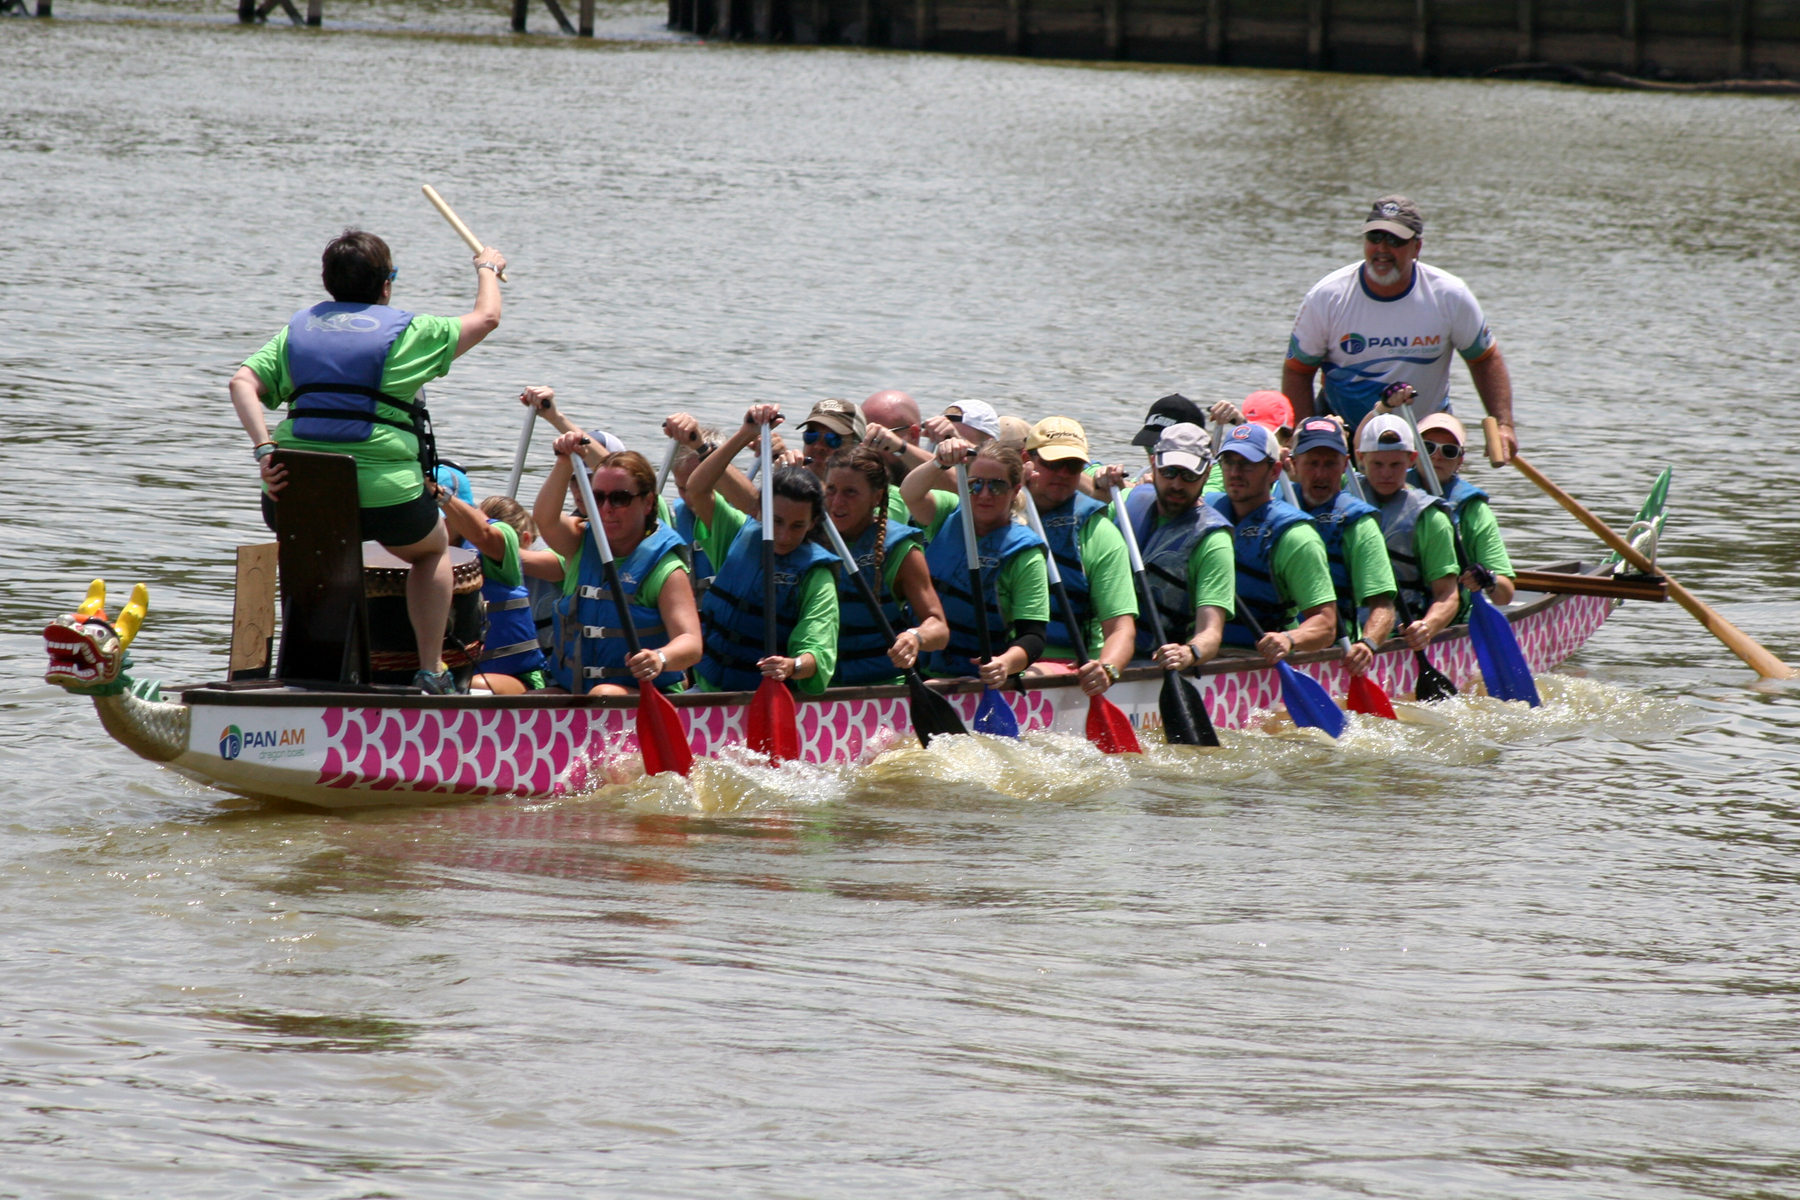 Rowan County Dragon Boat Race Competitors 